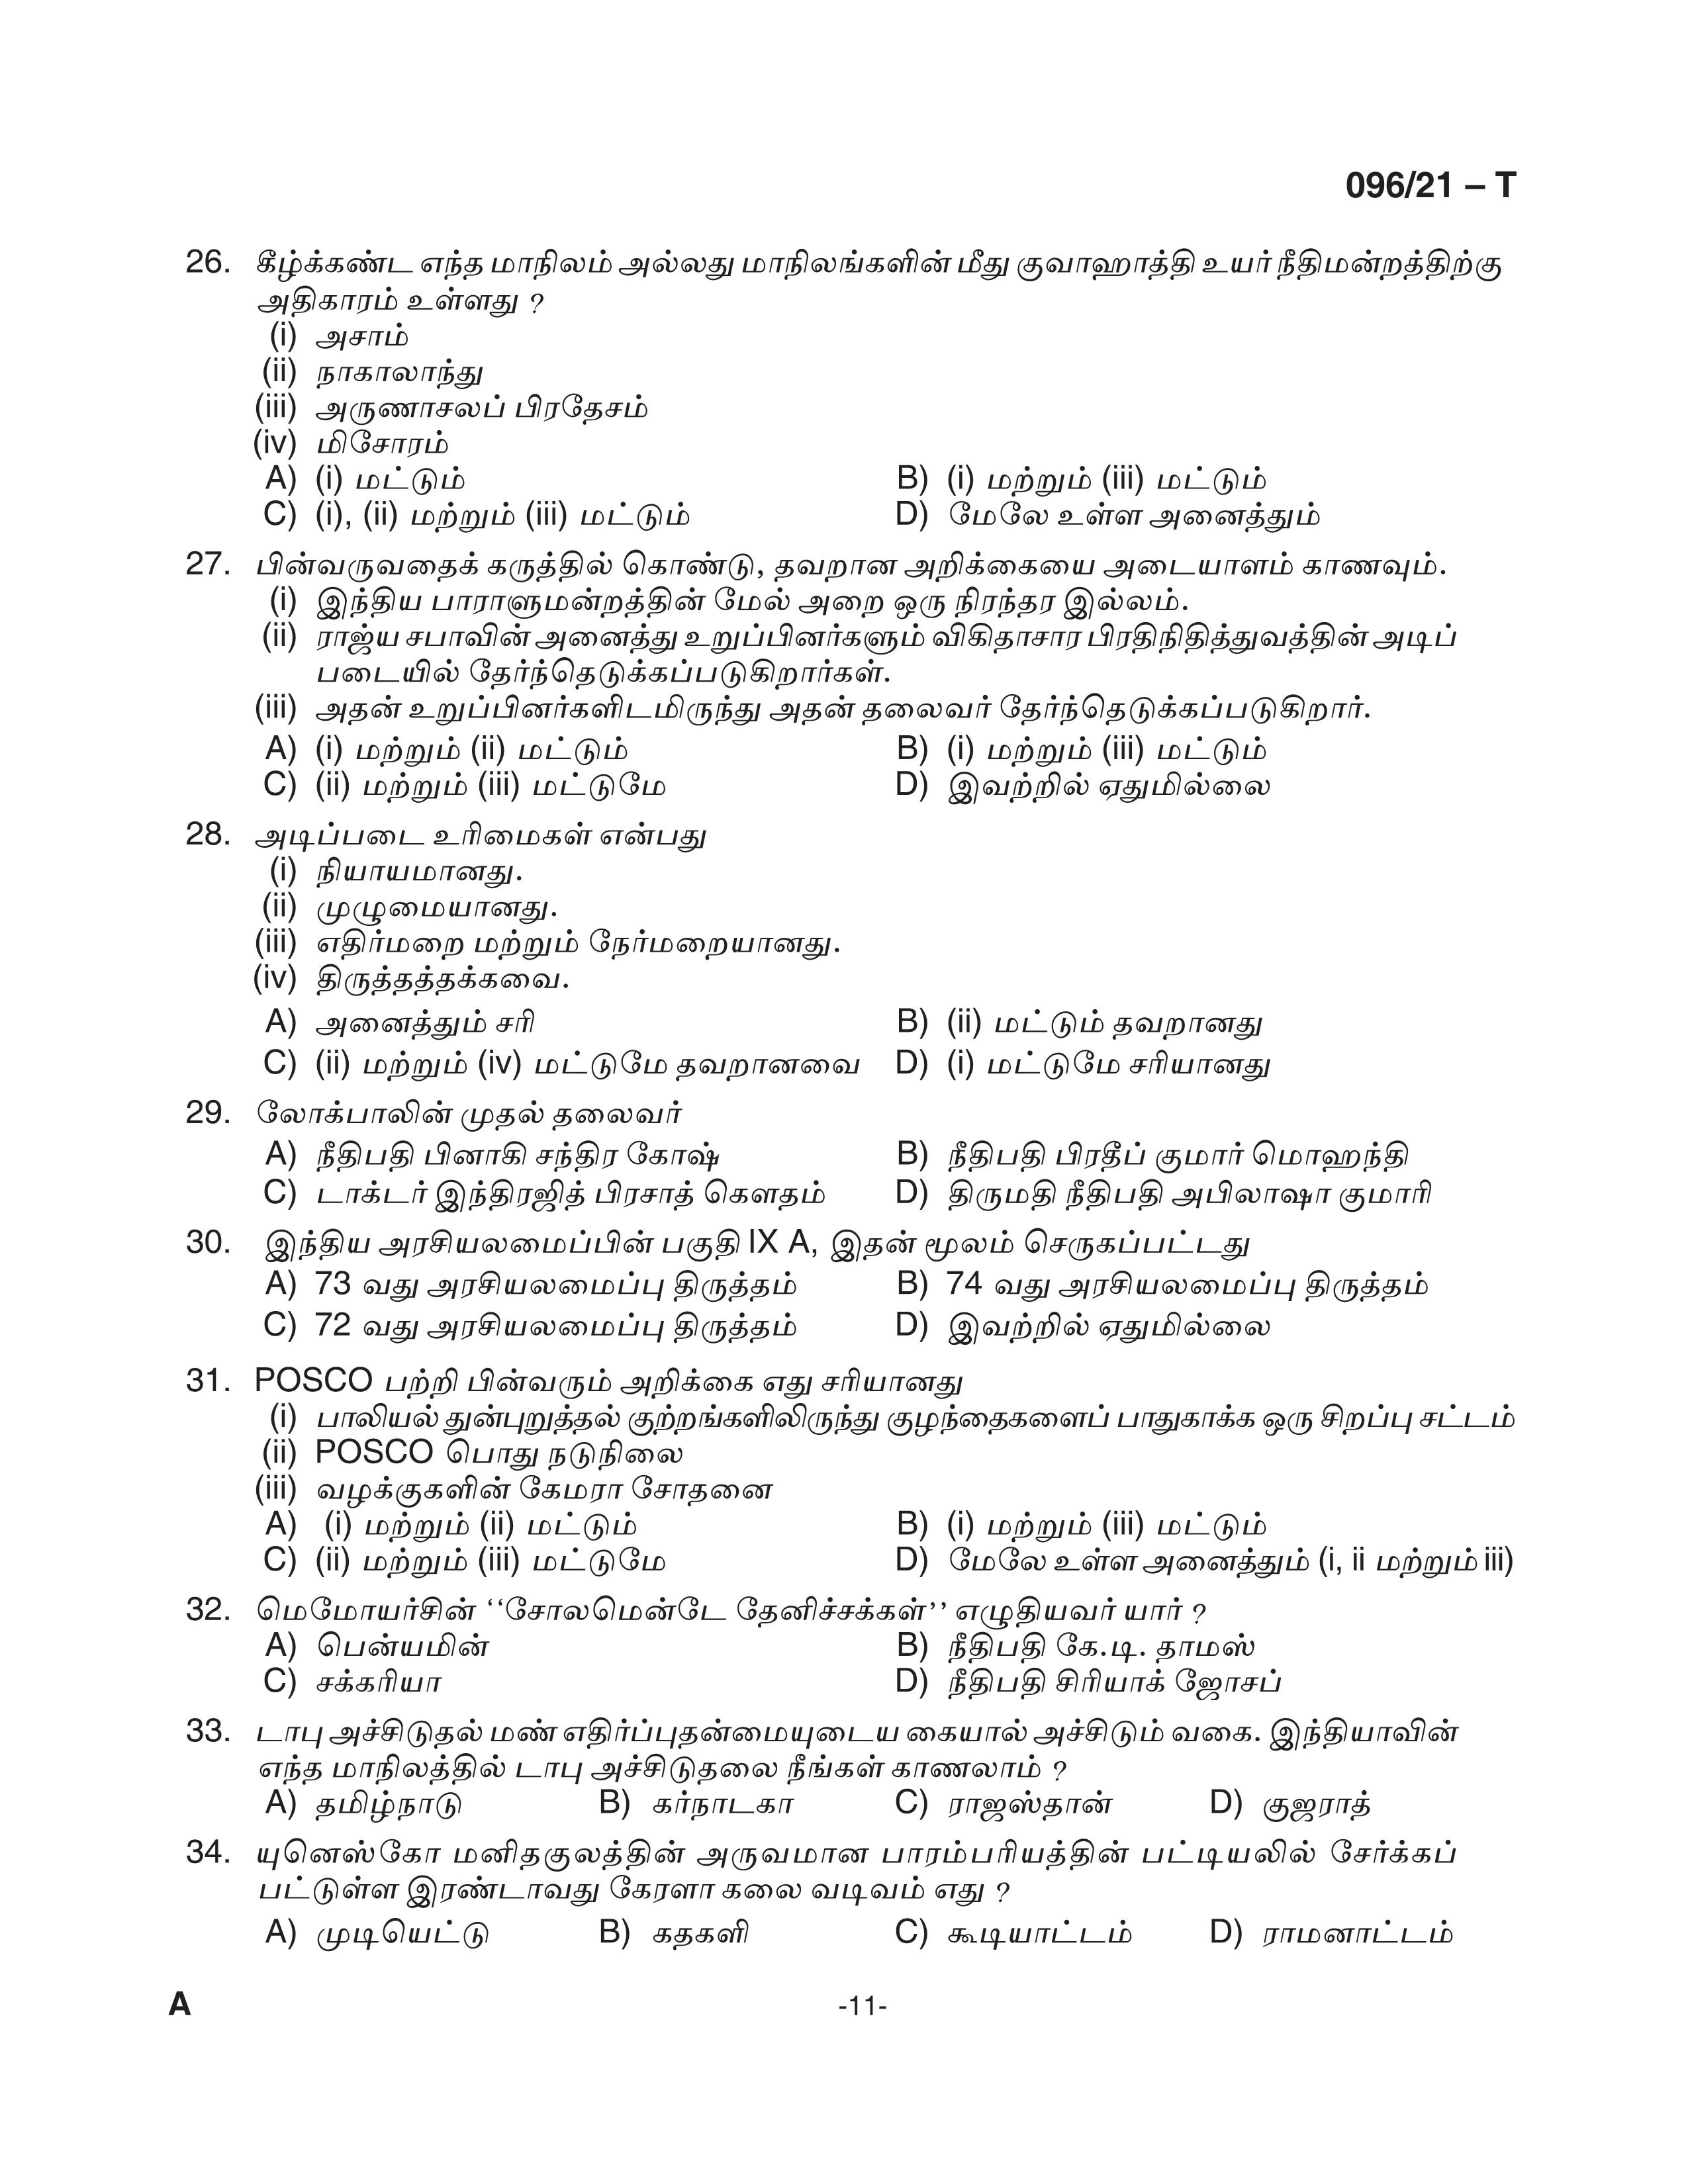 KPSC Degree Level Preliminary Exam Stage II Tamil Exam 2021 Code 09621 T 11